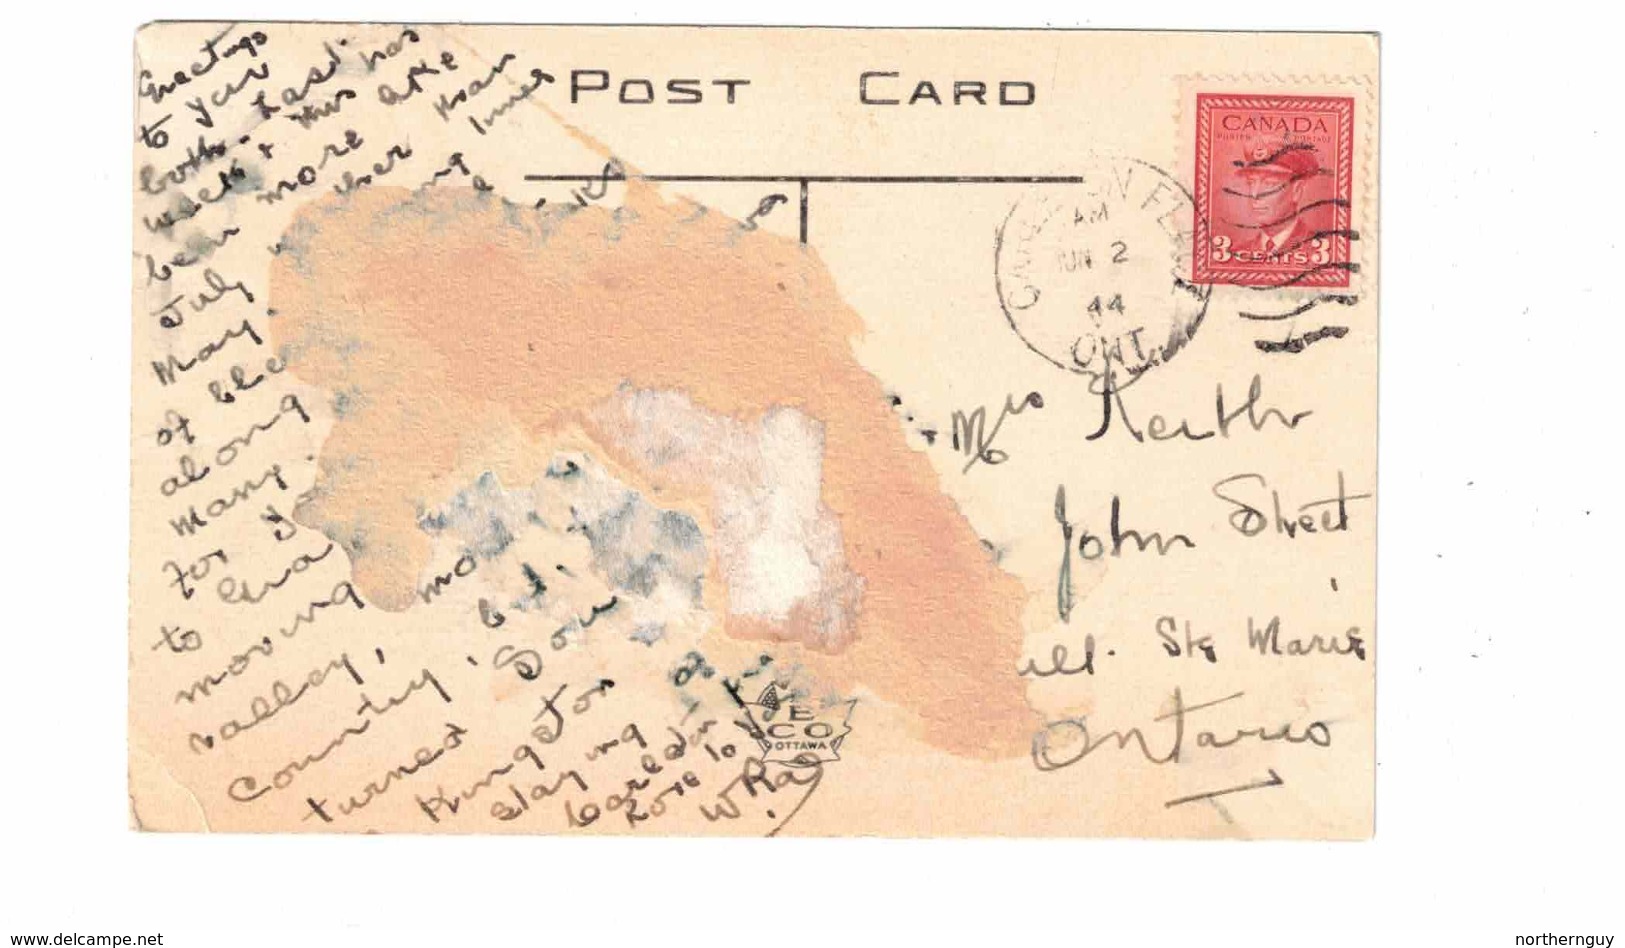 CARLETON PLACE, Ontario, Canada, The  Rapids, 1944 WB PECO Postcard, Lanark County - Sarnia